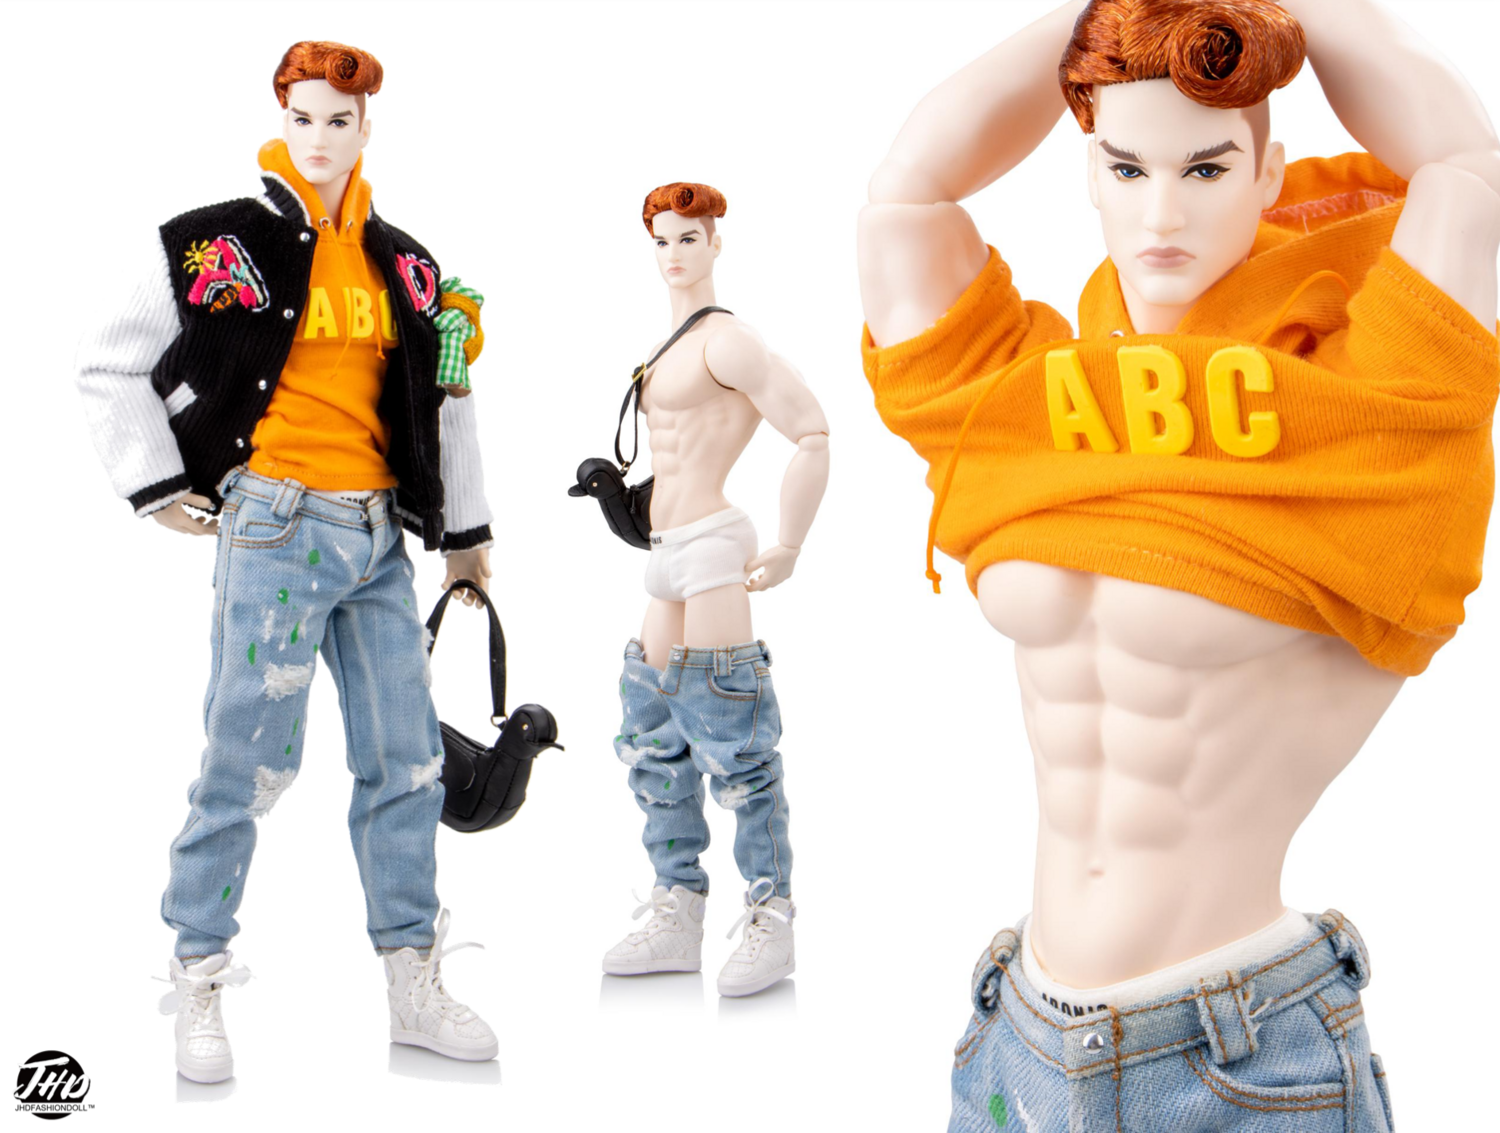 2021 JHD Fashion Doll: "Boy Next Door" Adonis Male Fashion Doll Gift-Set